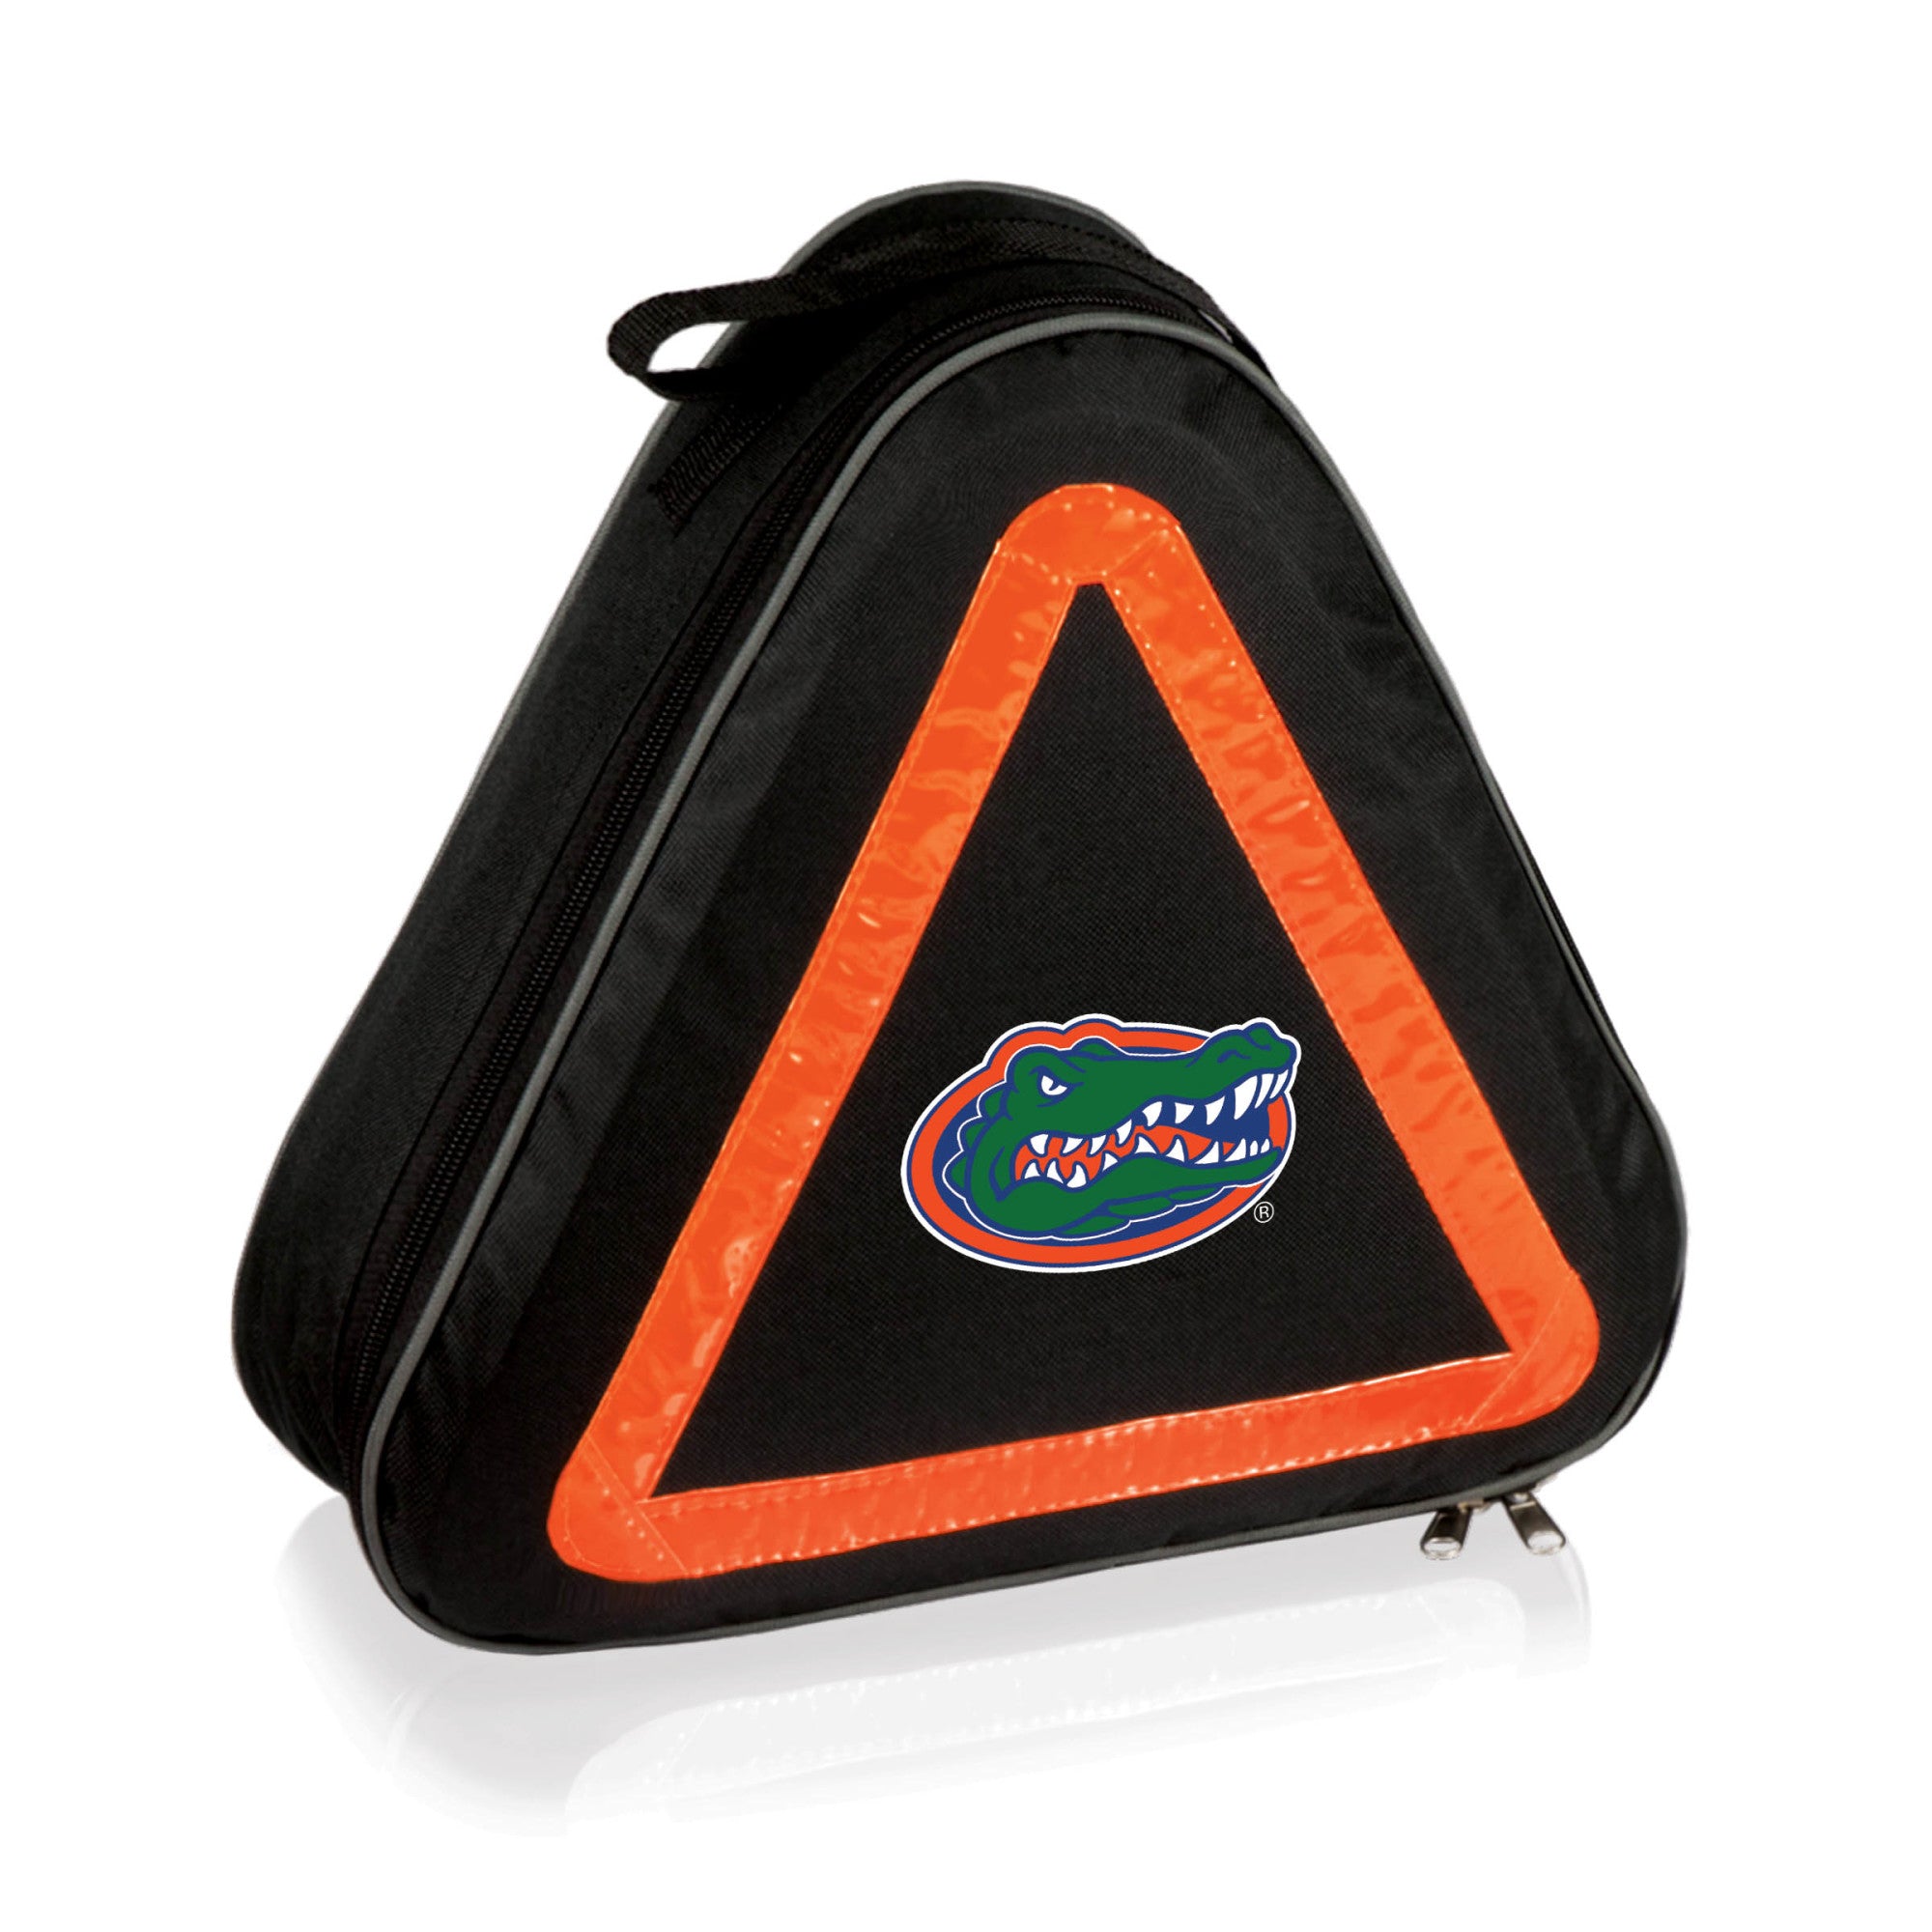 Florida Gators - Roadside Emergency Car Kit